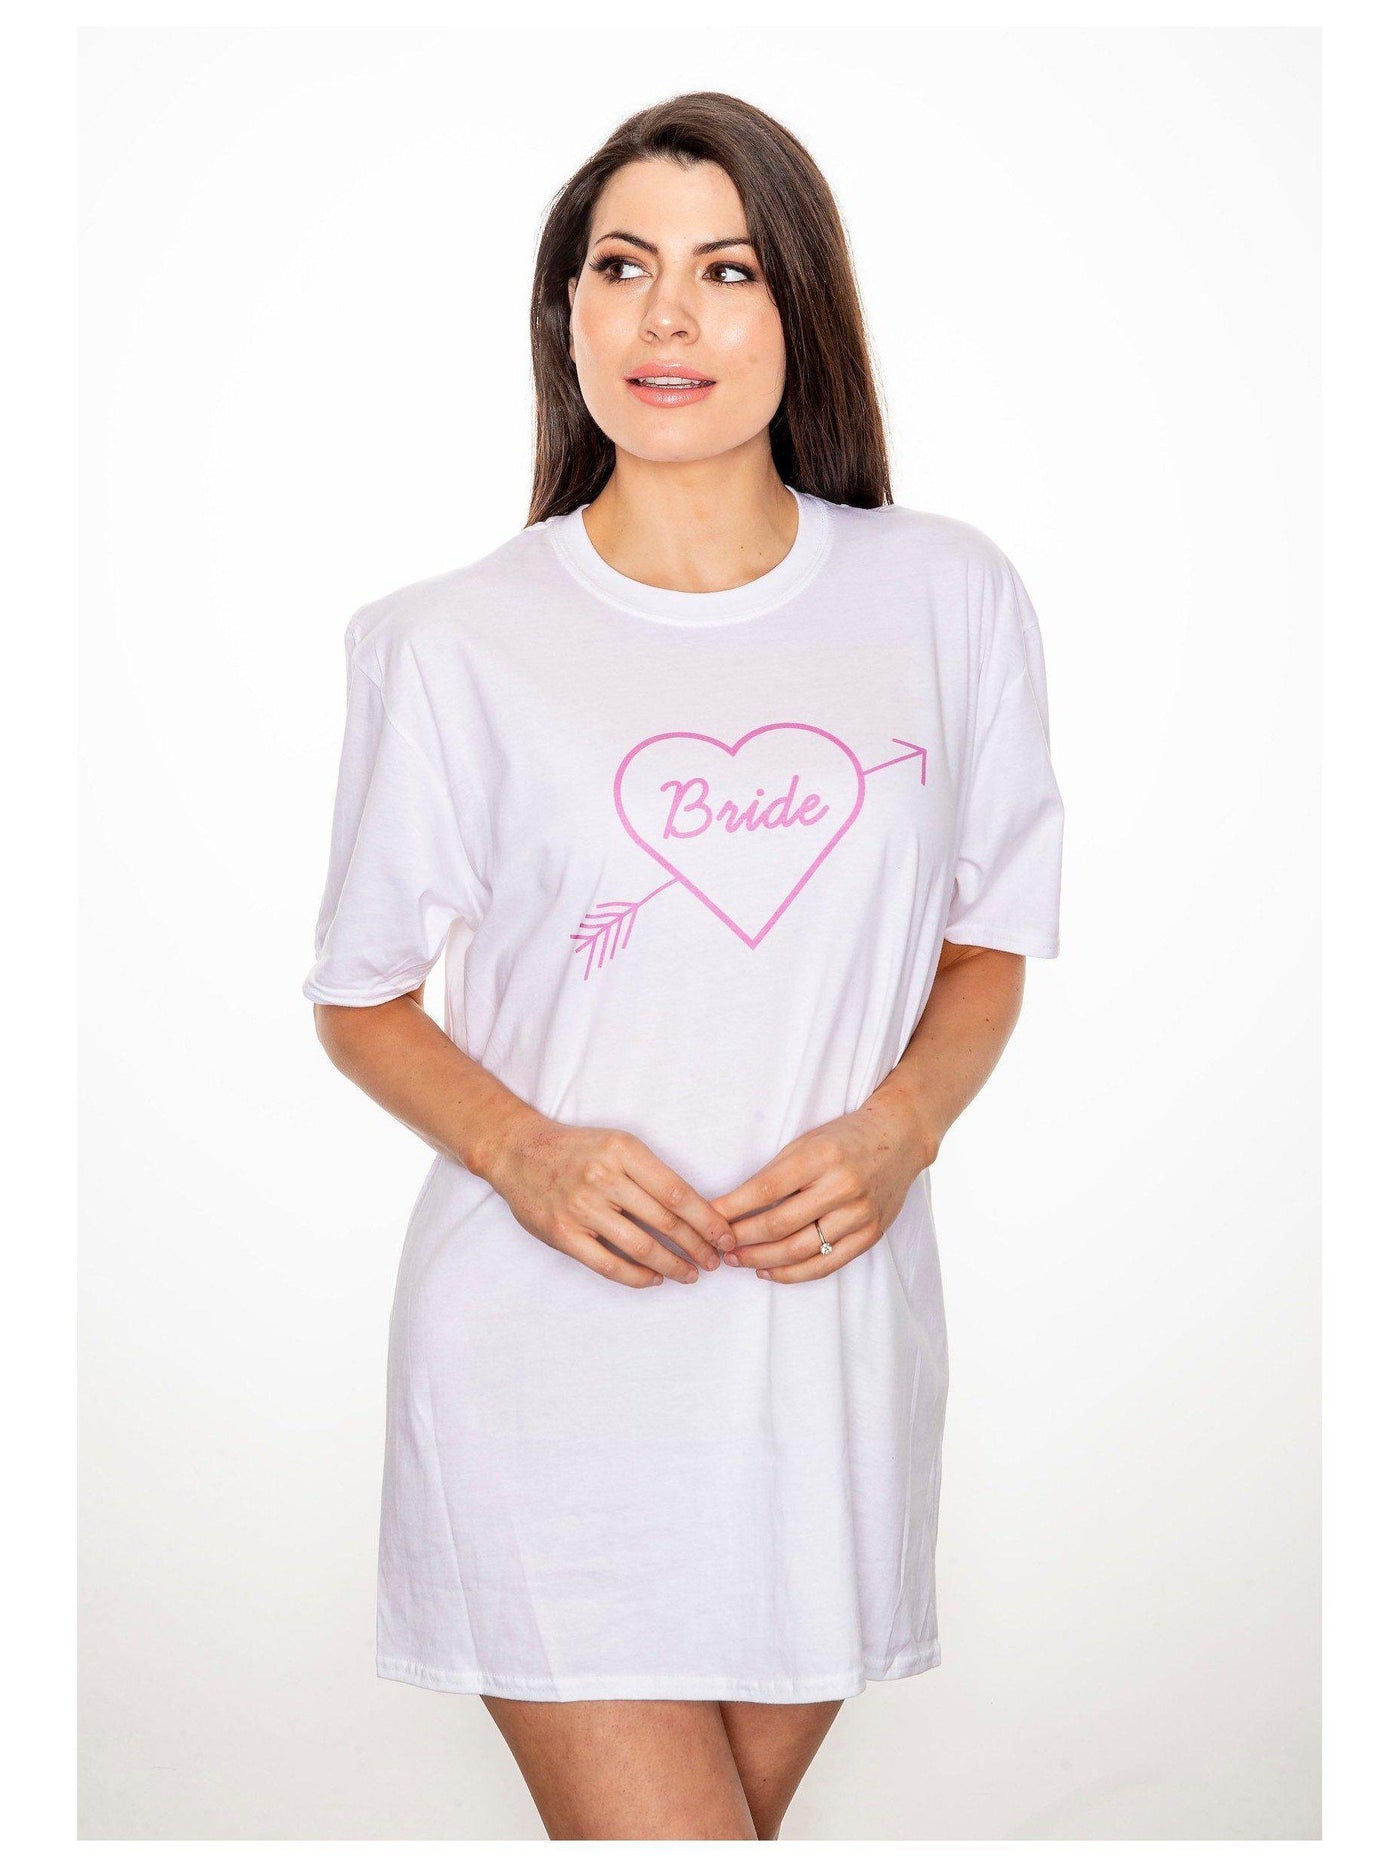 BRIDE sleep shirt | pyjamas for bride